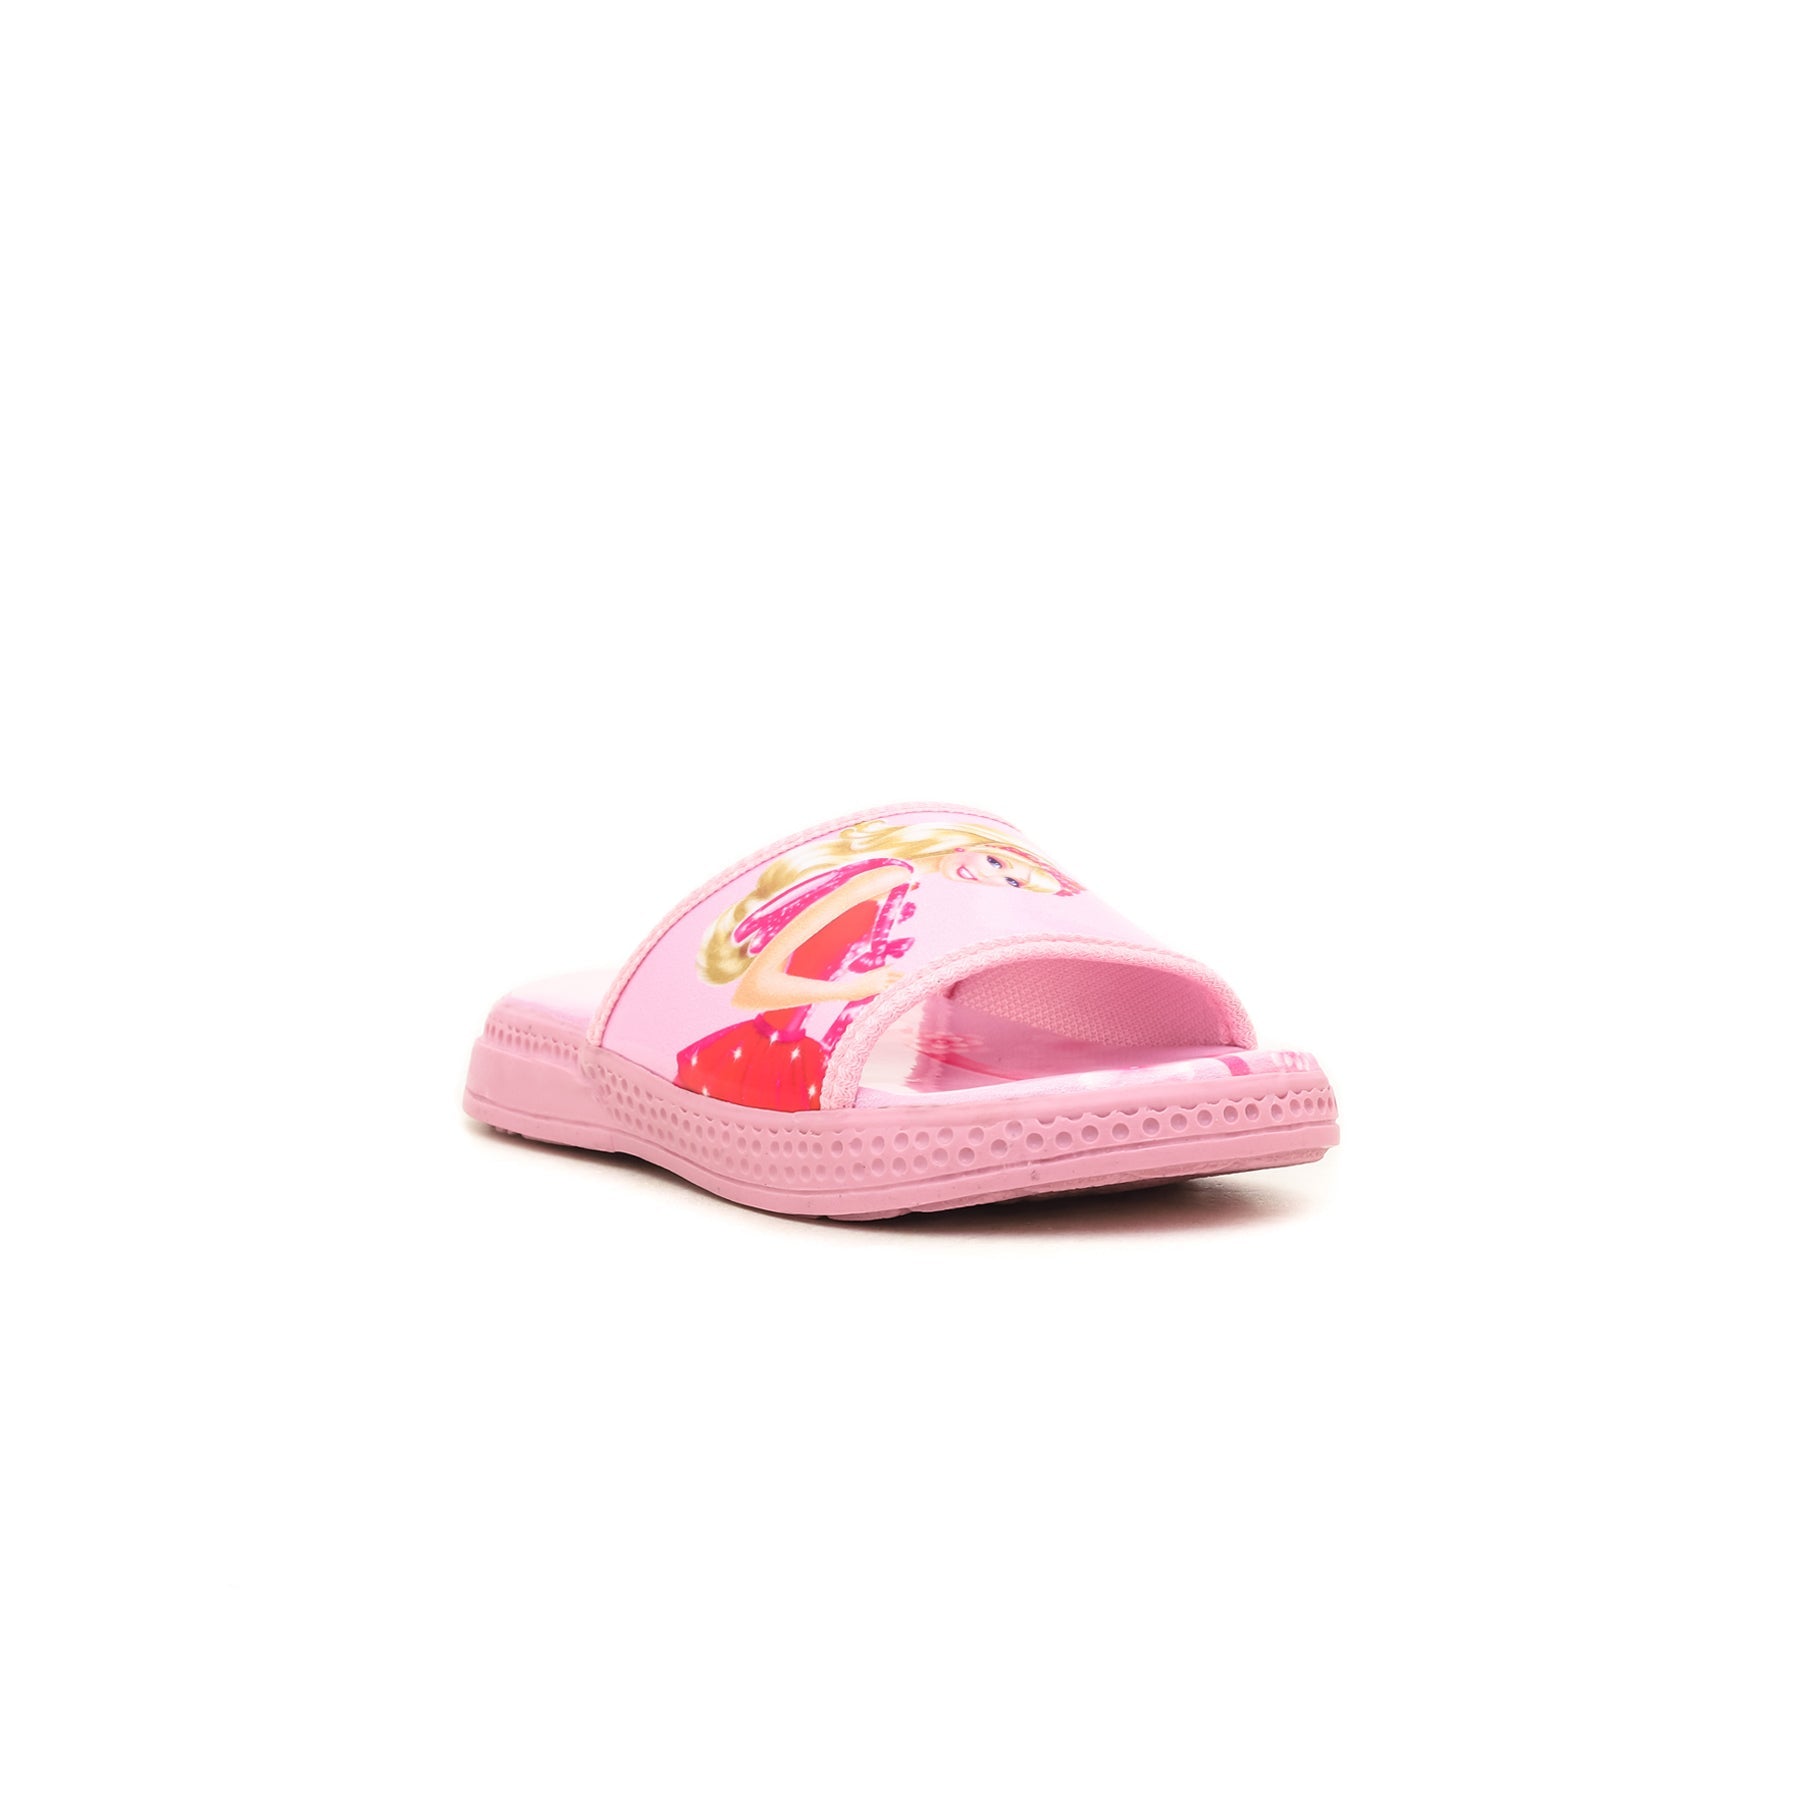 Girls Pink Casual Slipper KD5284